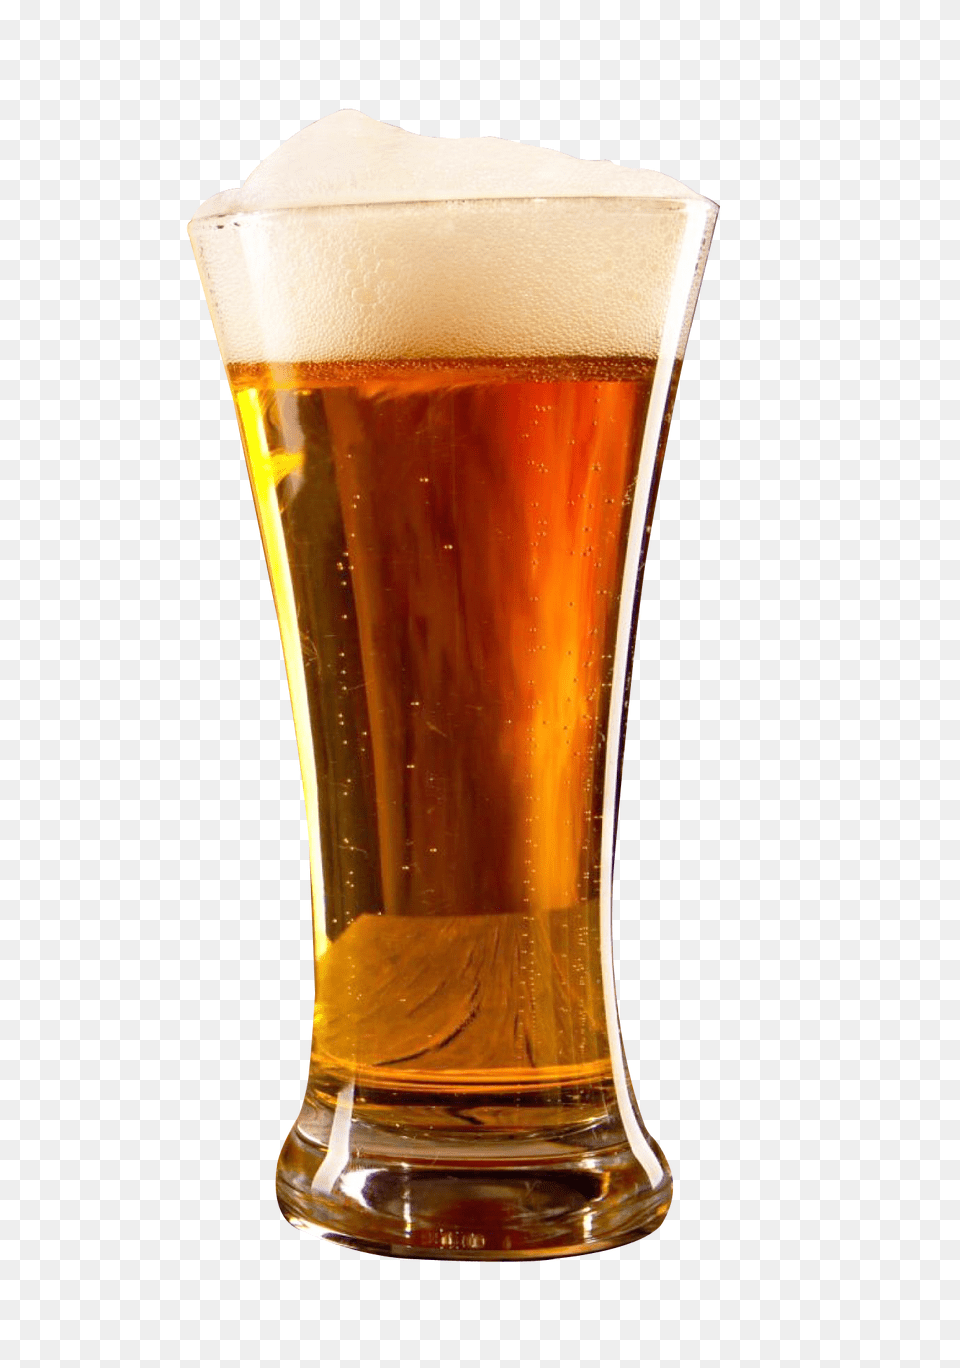 Pngpix Com Beer Glass Image, Alcohol, Beer Glass, Beverage, Lager Free Png Download